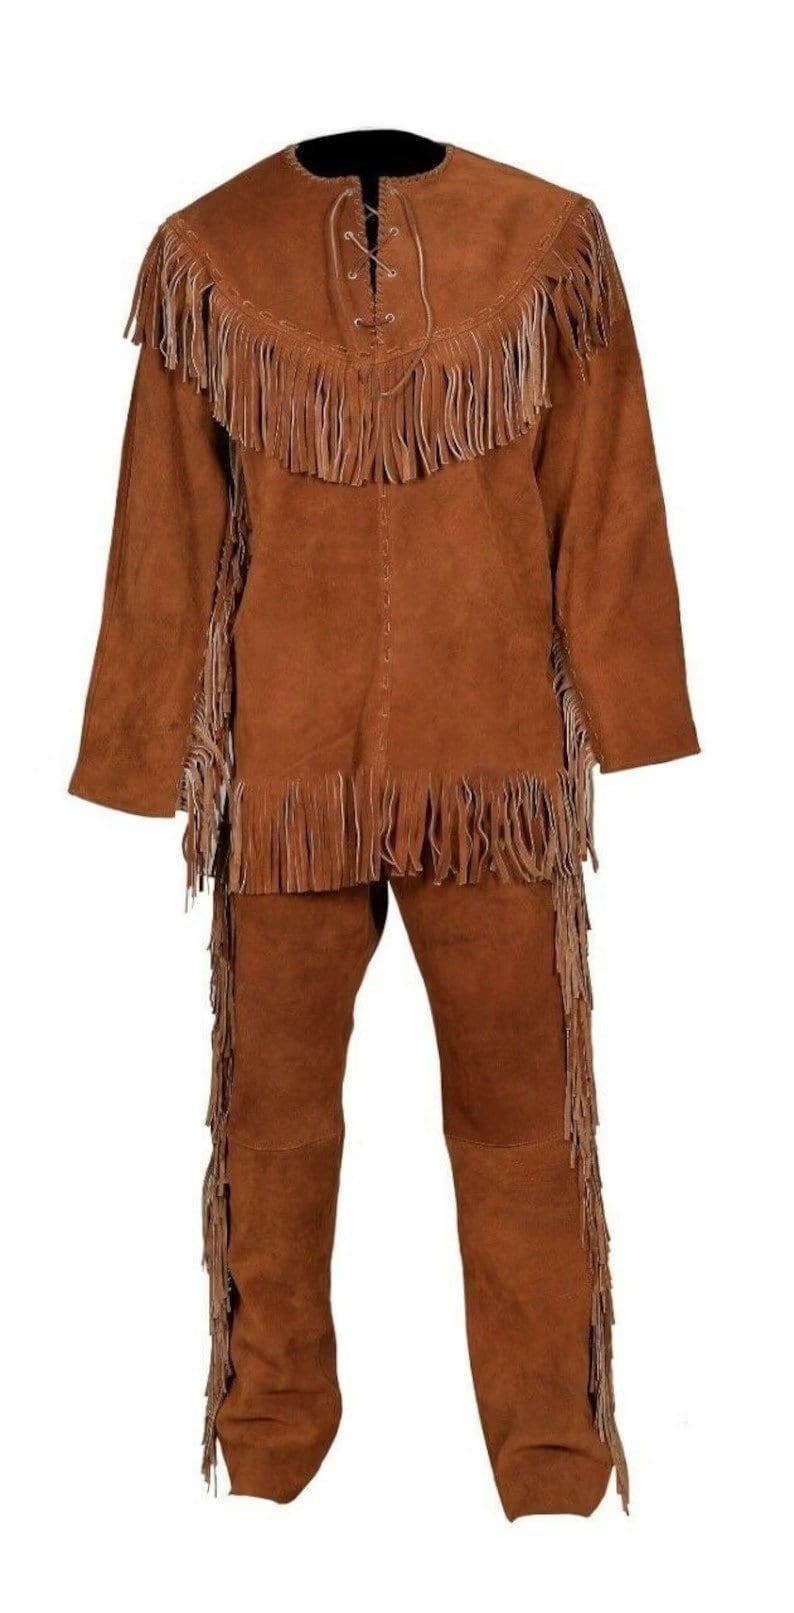 buckskin clothing - Picture of Wheelwright Museum of the American Indian,  Santa Fe - Tripadvisor